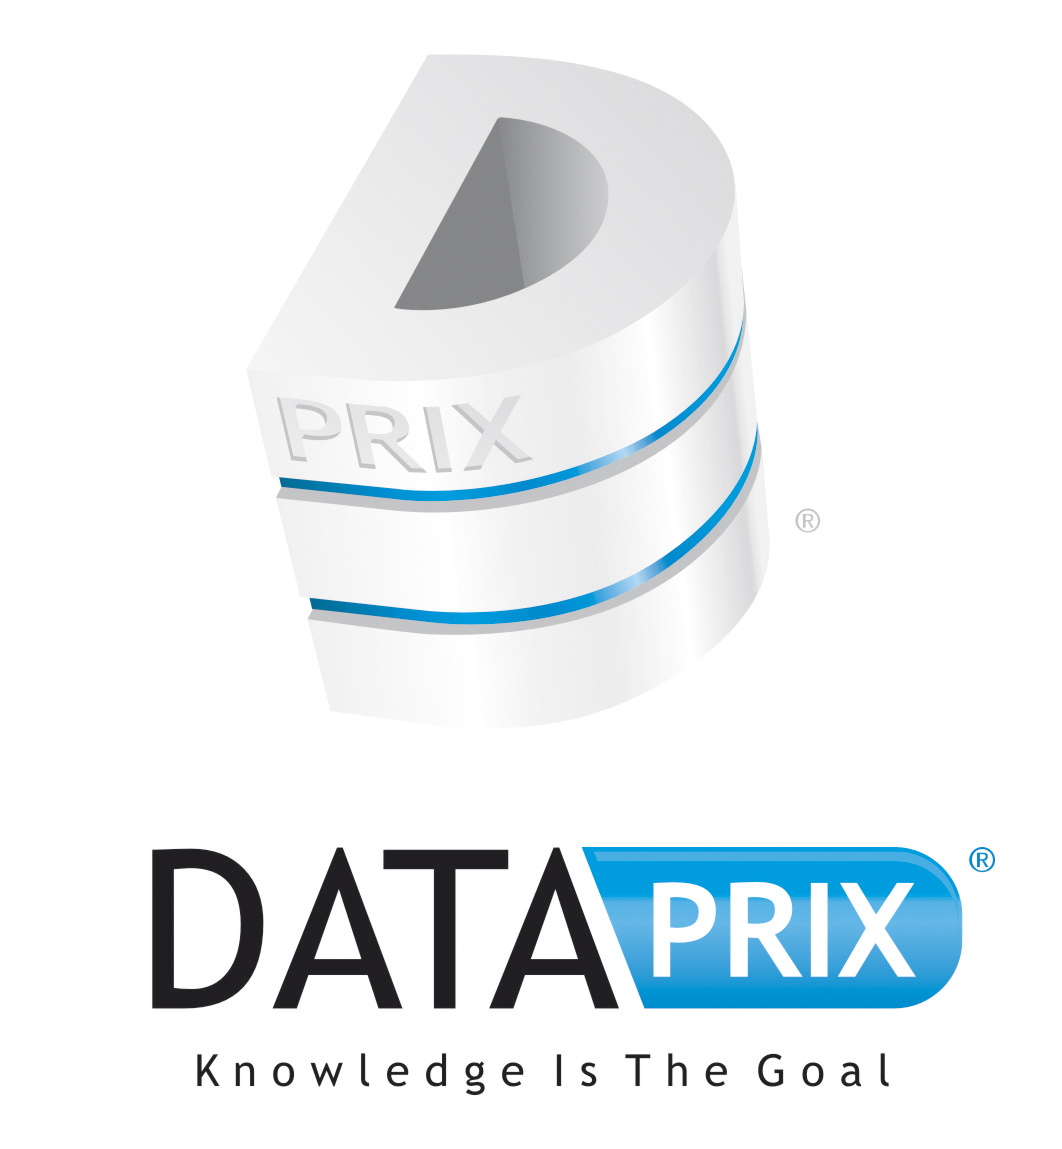 Dataprix